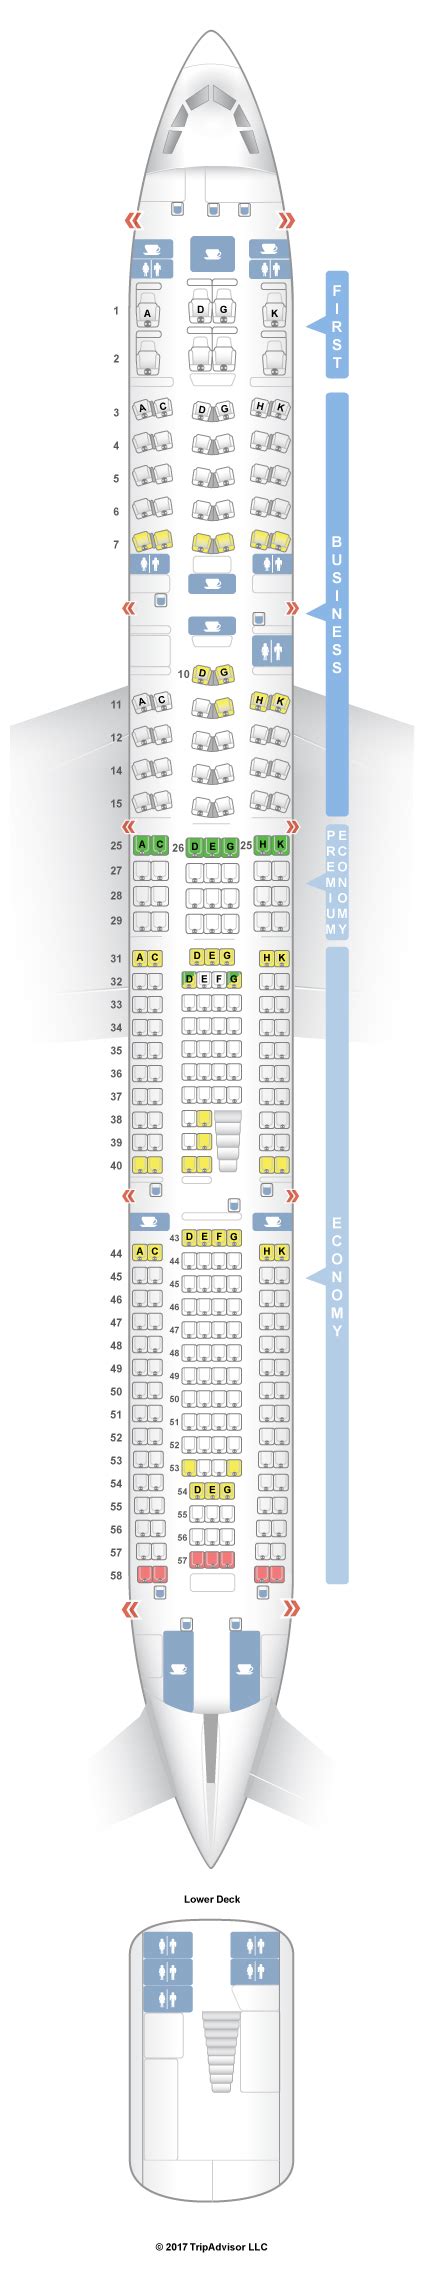 Seatguru Seat Map Lufthansa Airbus A340 600 346 V2